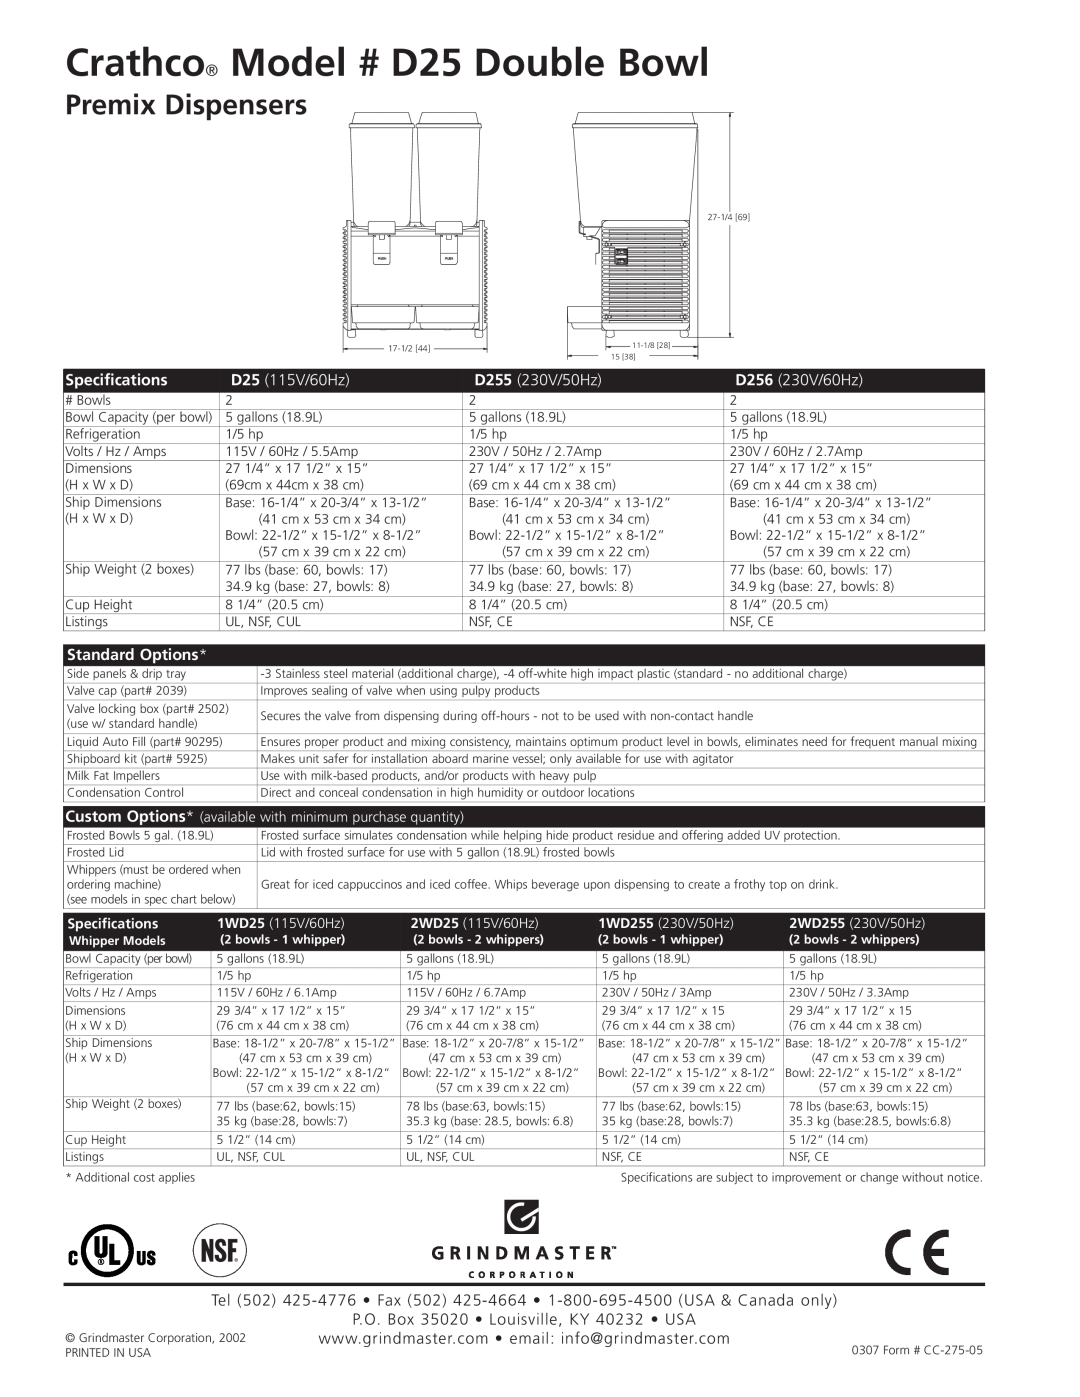 Grindmaster manual Premix Dispensers, Crathco Model # D25 Double Bowl, Specifications, D25 115V/60Hz, D255 230V/50Hz 